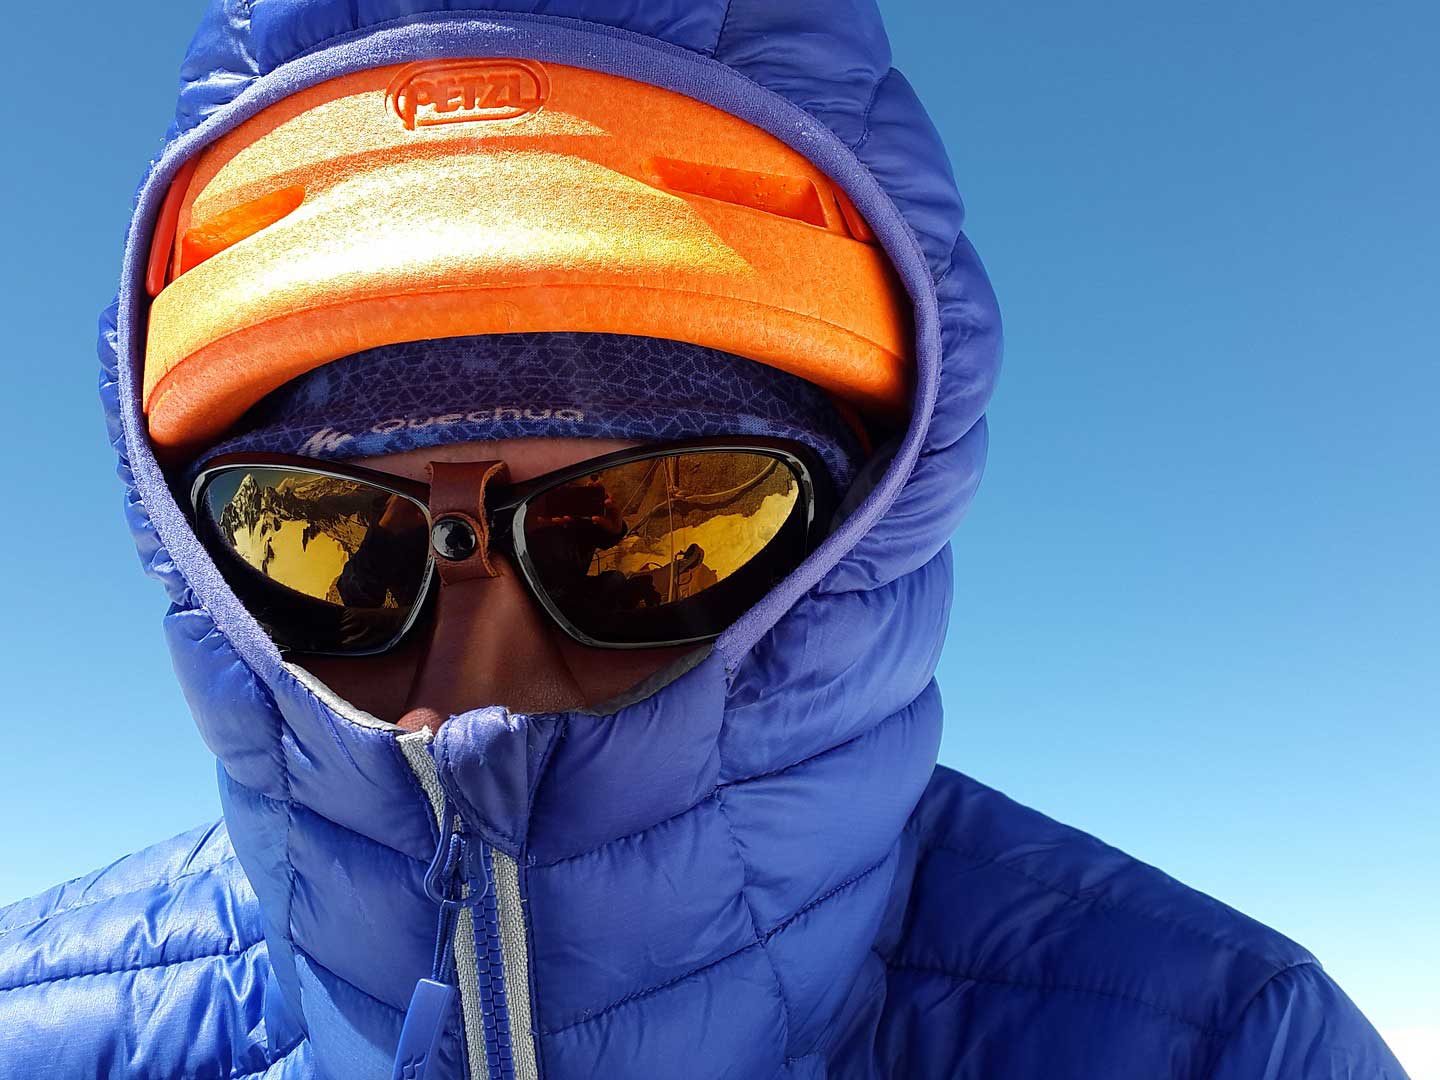 Person wearing a blue parka, orange hat, and glacier glasses.